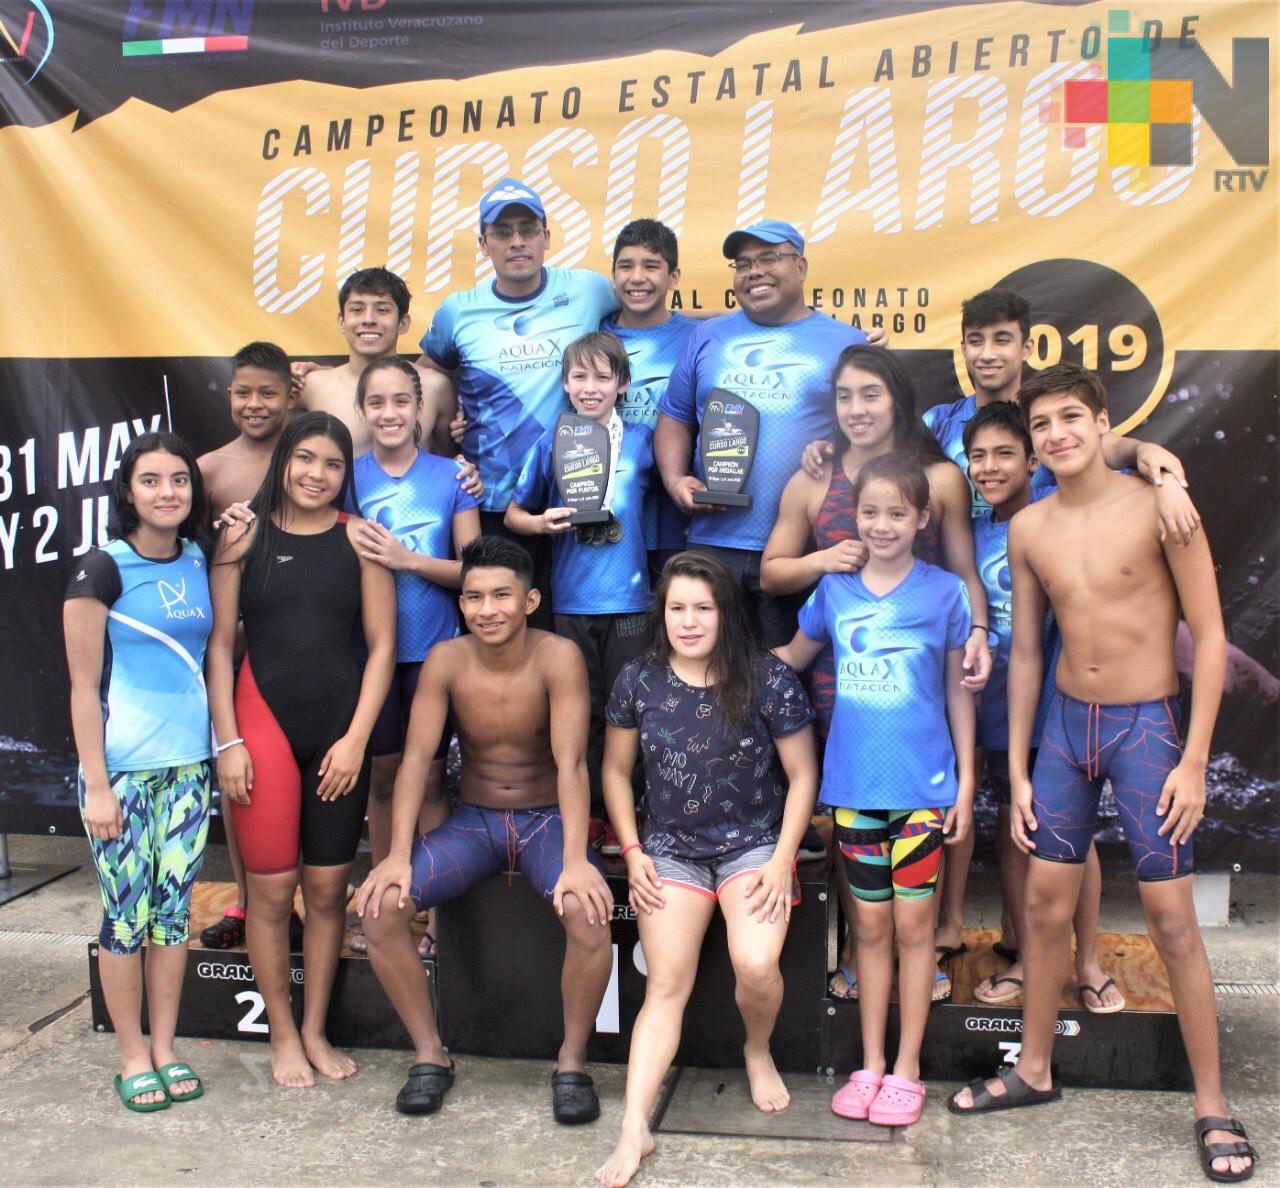 Conquista Club Aquax, Campeonato Estatal  Curso Largo  2019   